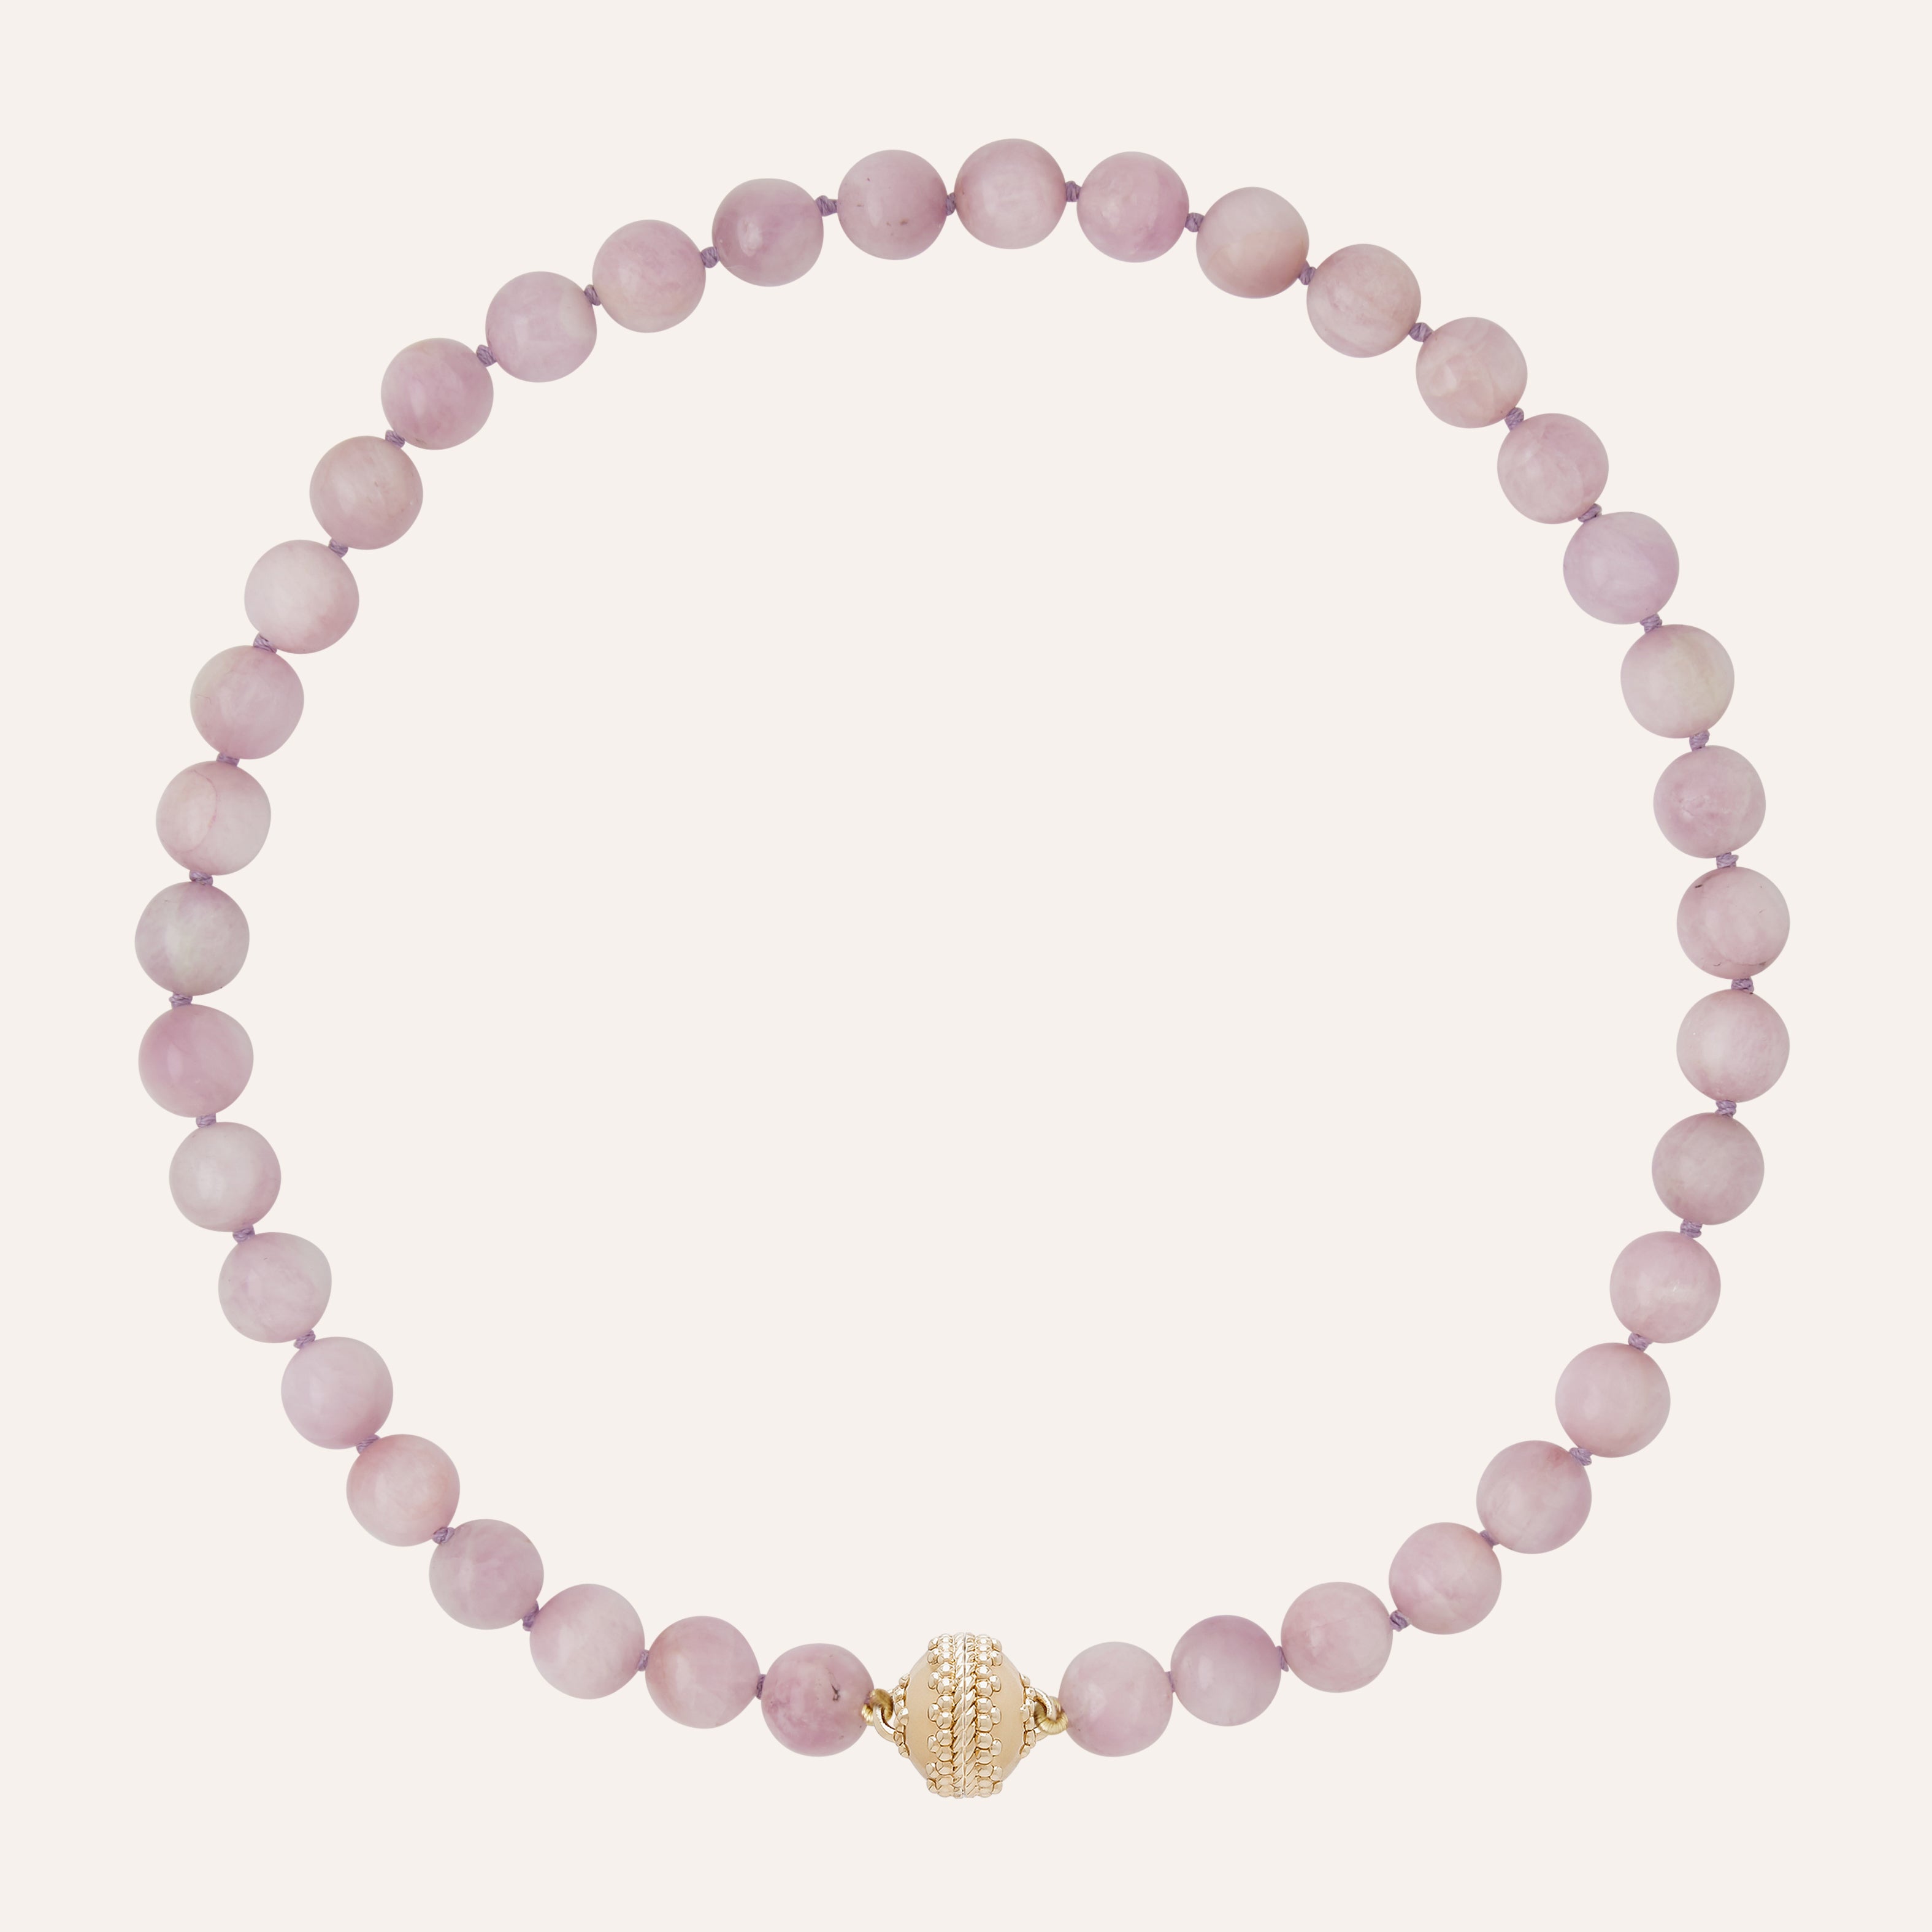 Victoire Pink Kunzite 10mm Necklace